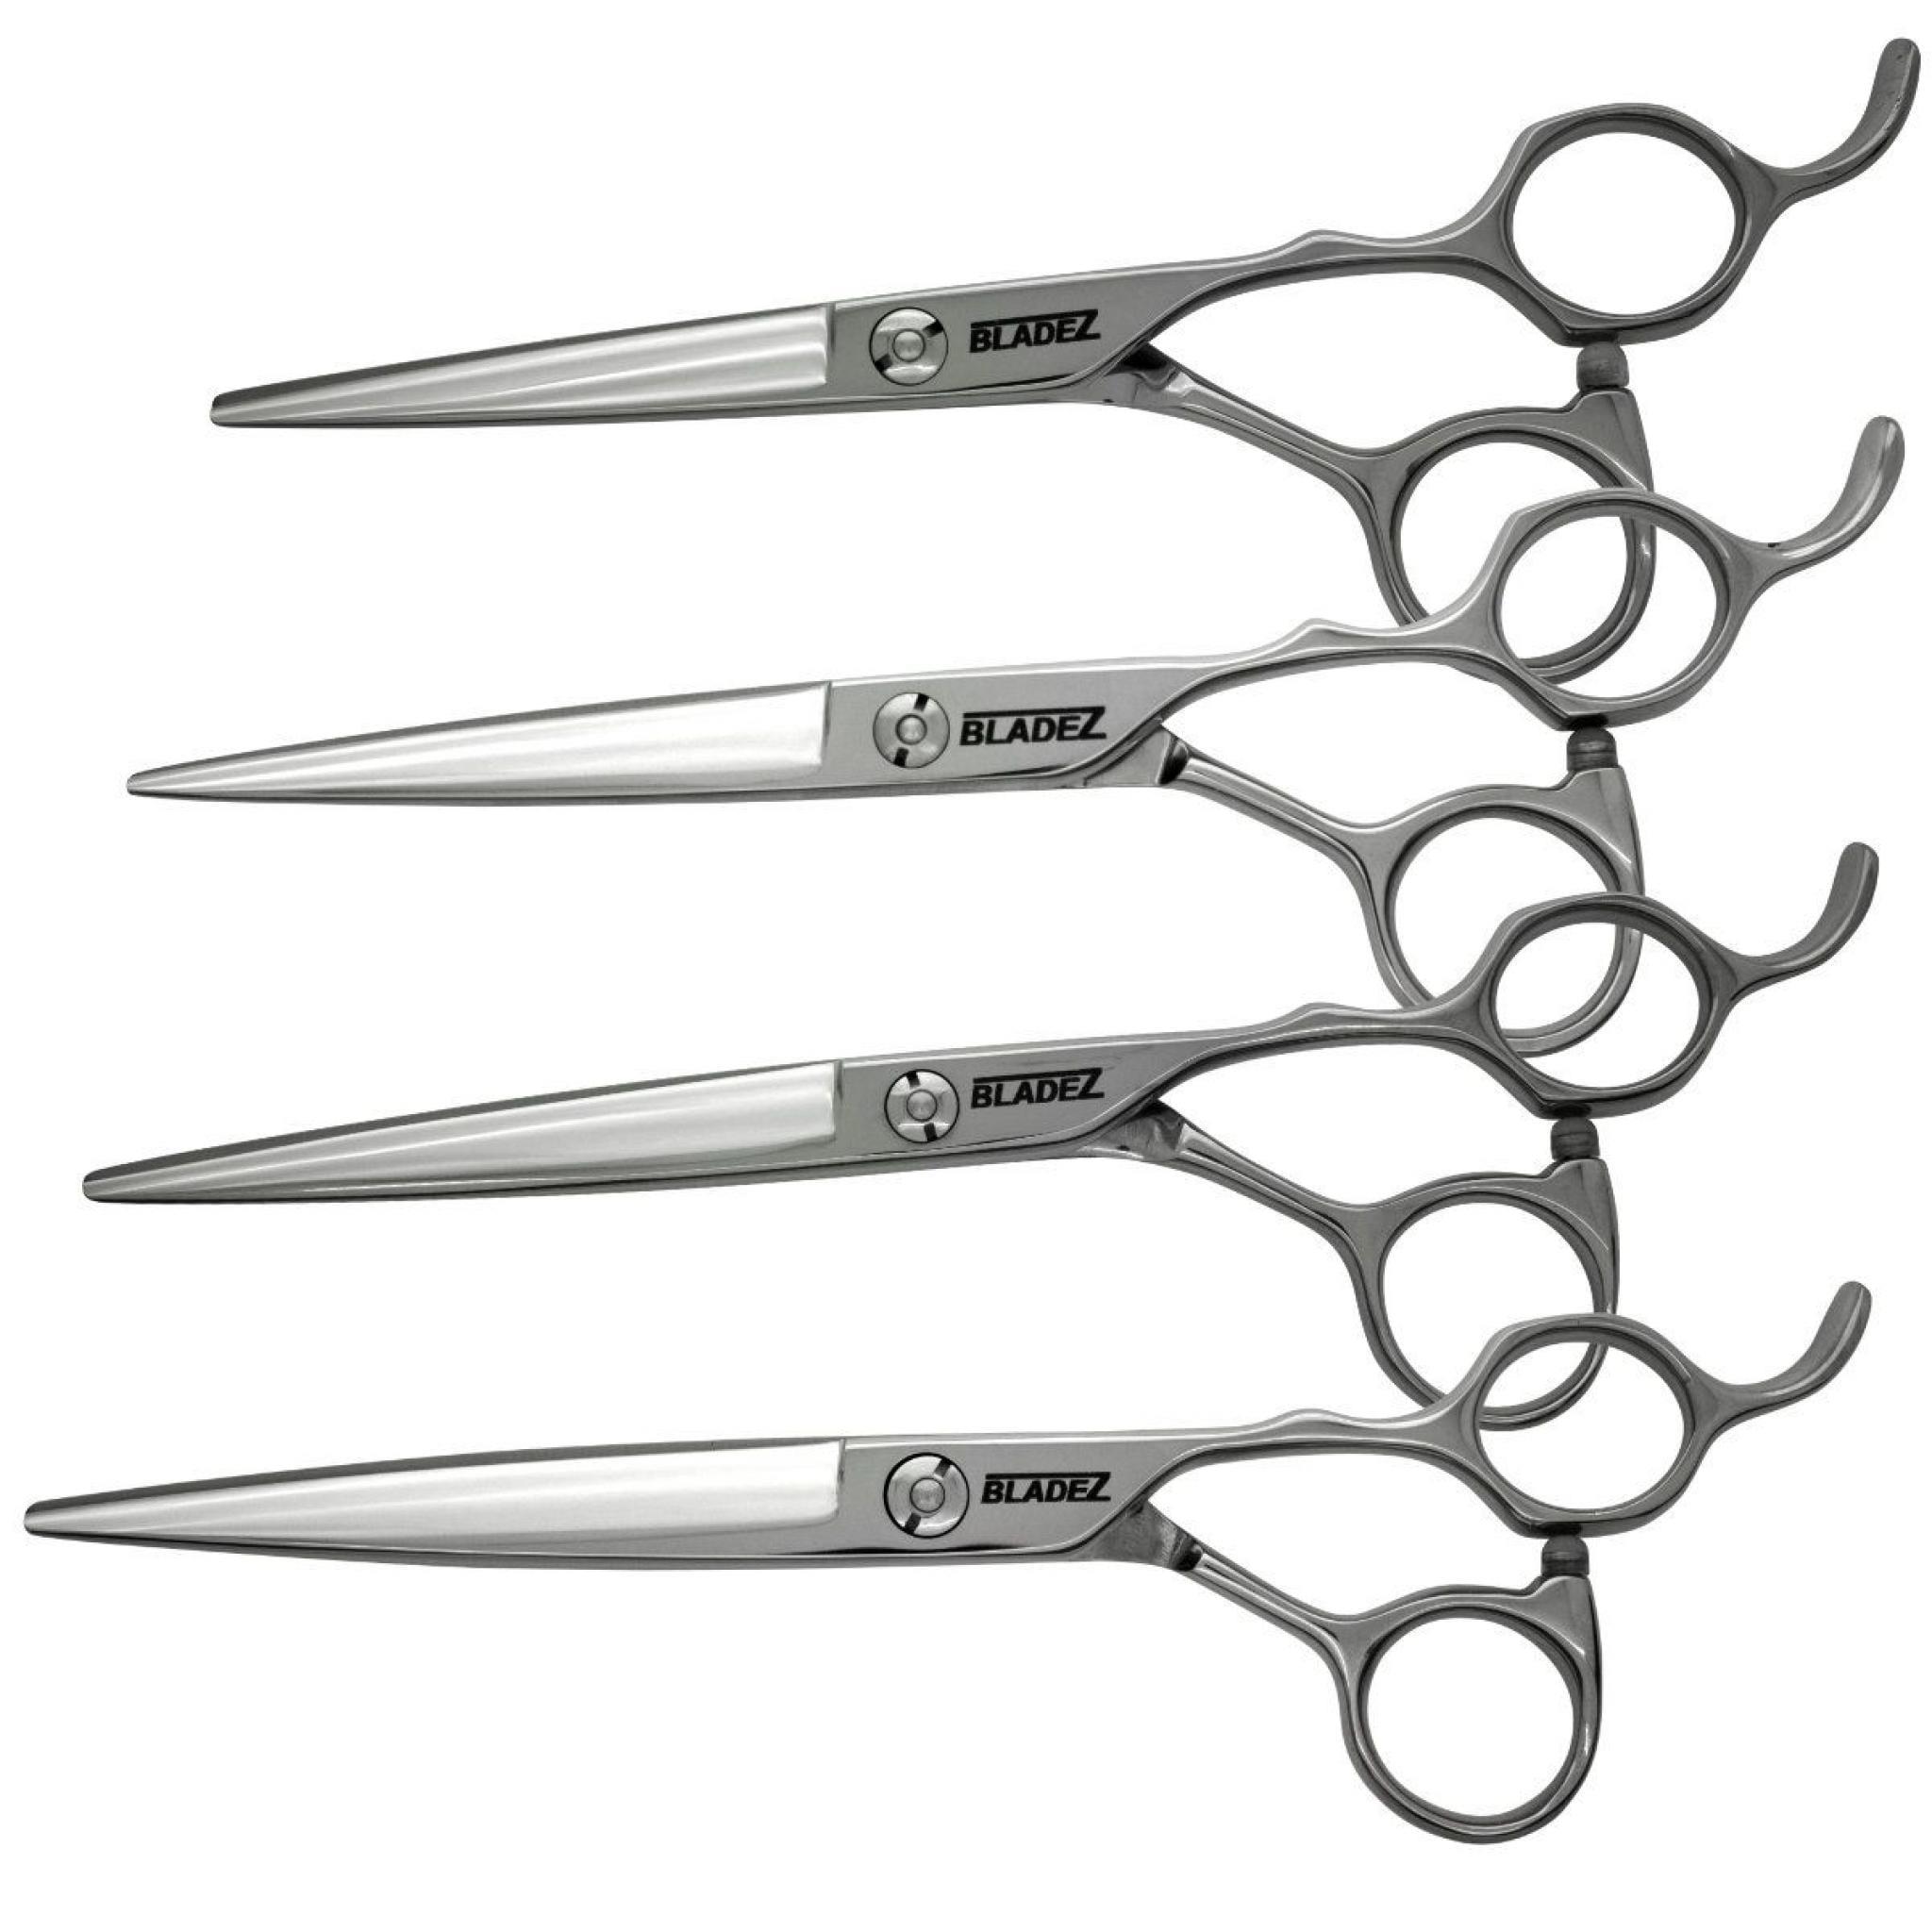 Bladez 'Eagle' Hairdressing Scissors 1